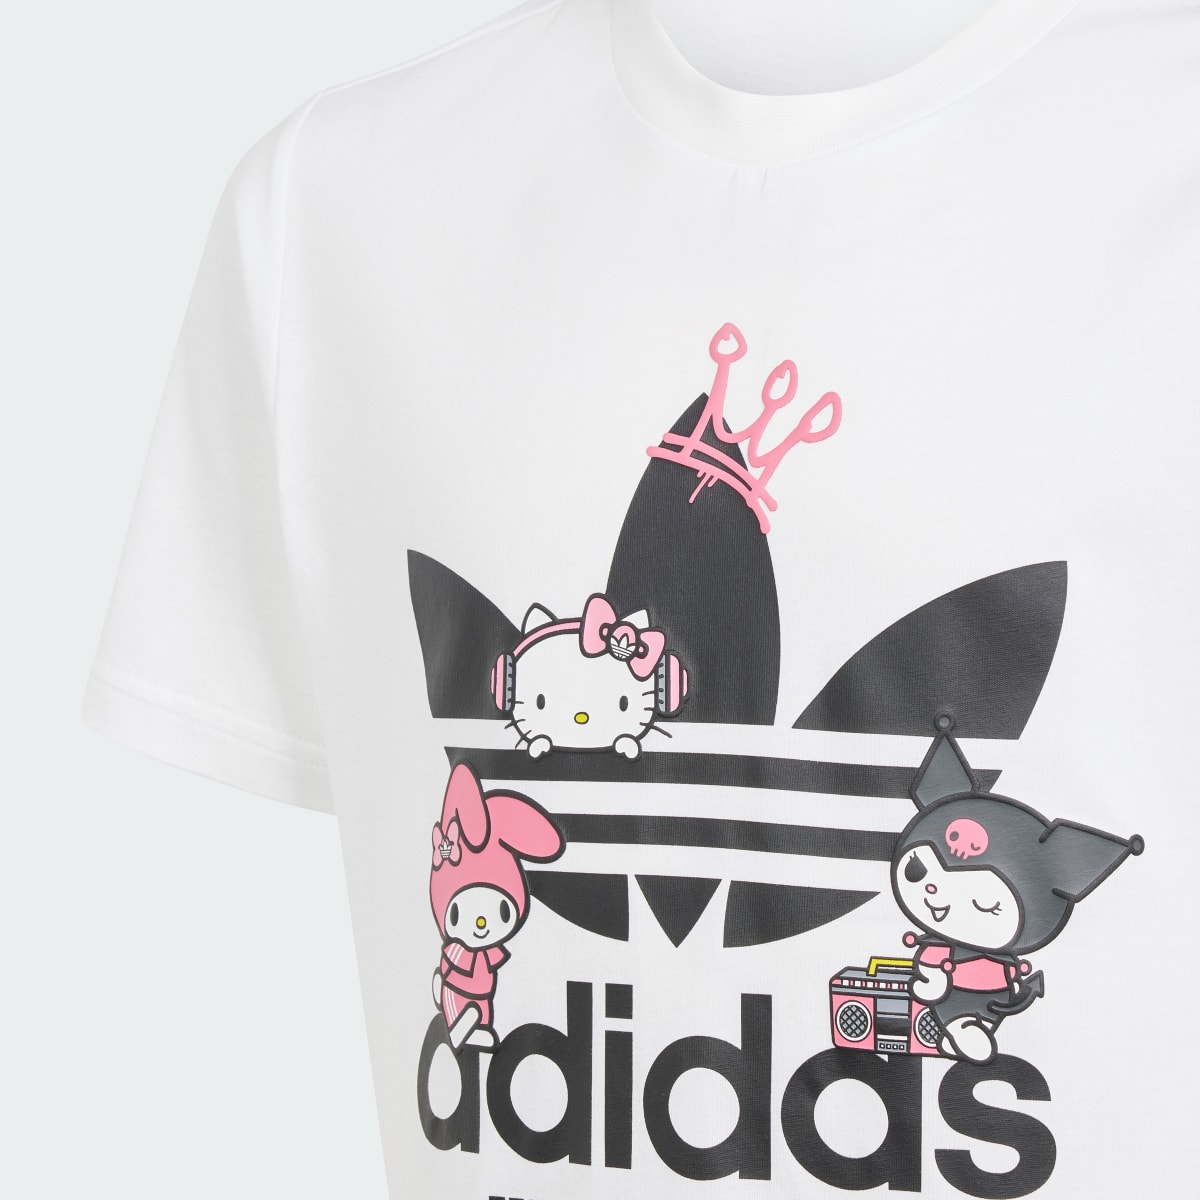 Adidas Originals x Hello Kitty Tee. 5